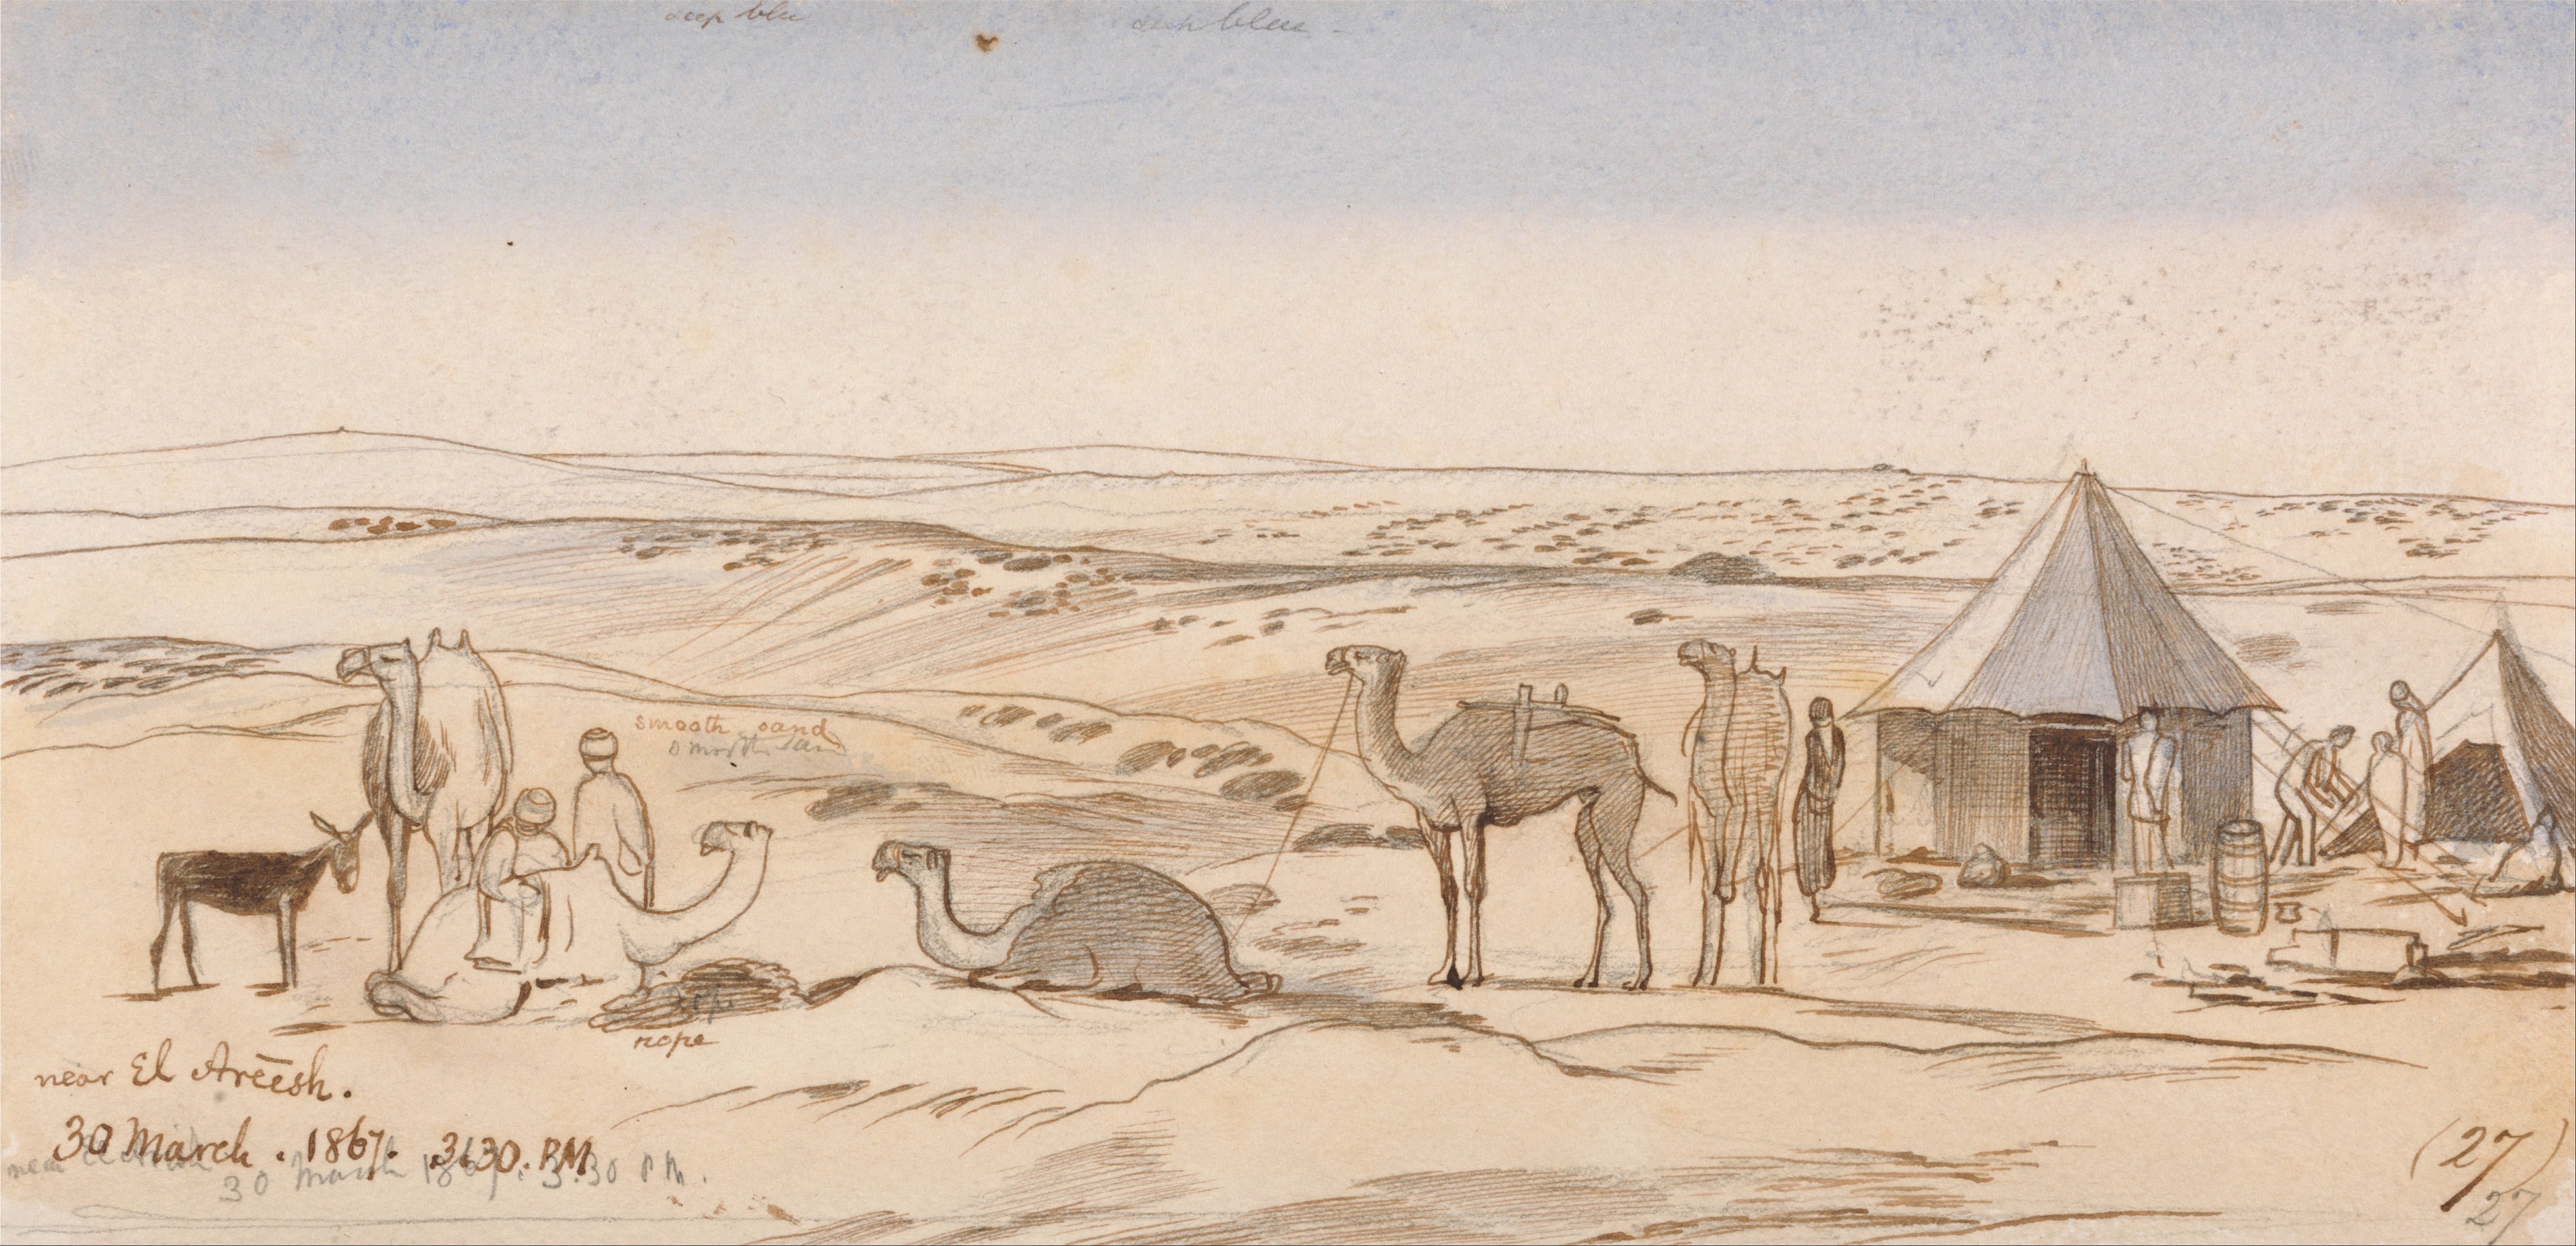 Edward Lear - Near El Areesh, 3-30 pm, 30 March 1867 (27) - Google Art Project